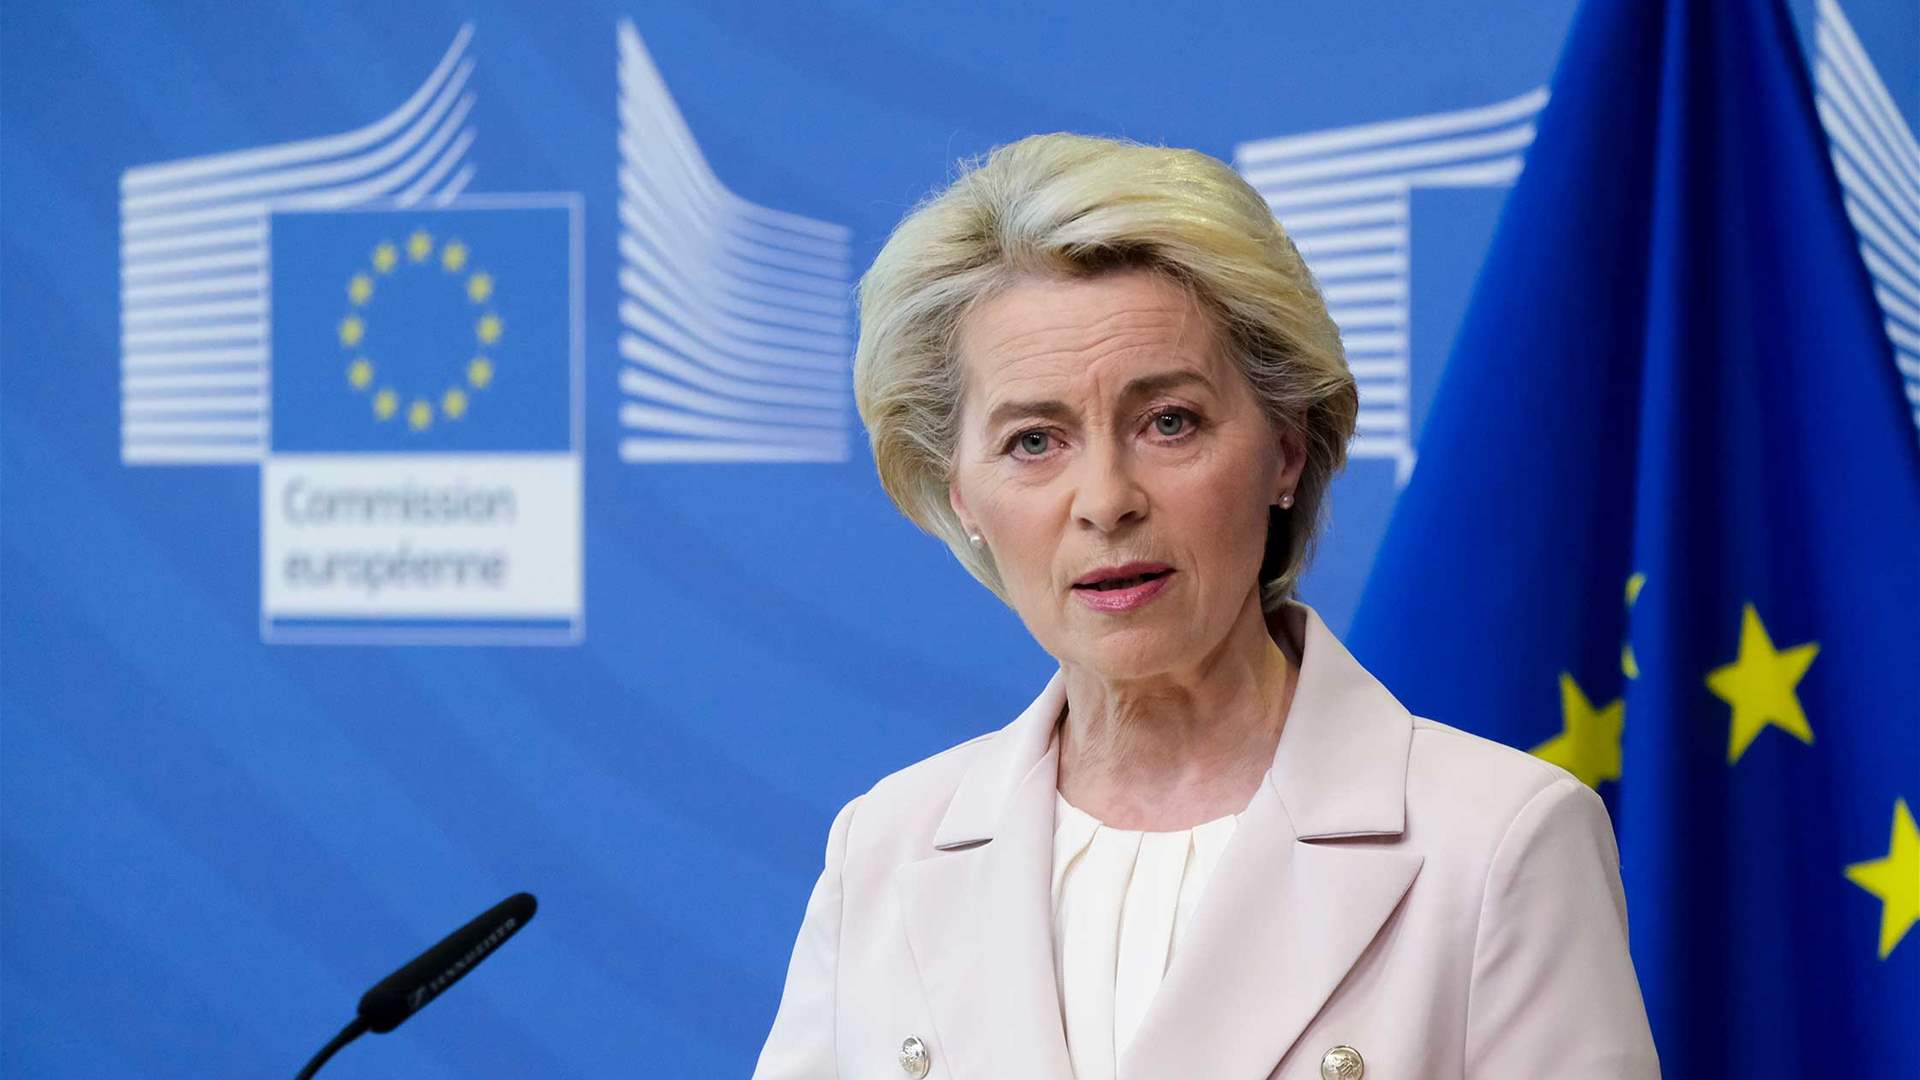 EU chief Ursula von der Leyen calls for &#39;strong Europe&#39; during &#39;period of deep anxiety&#39;